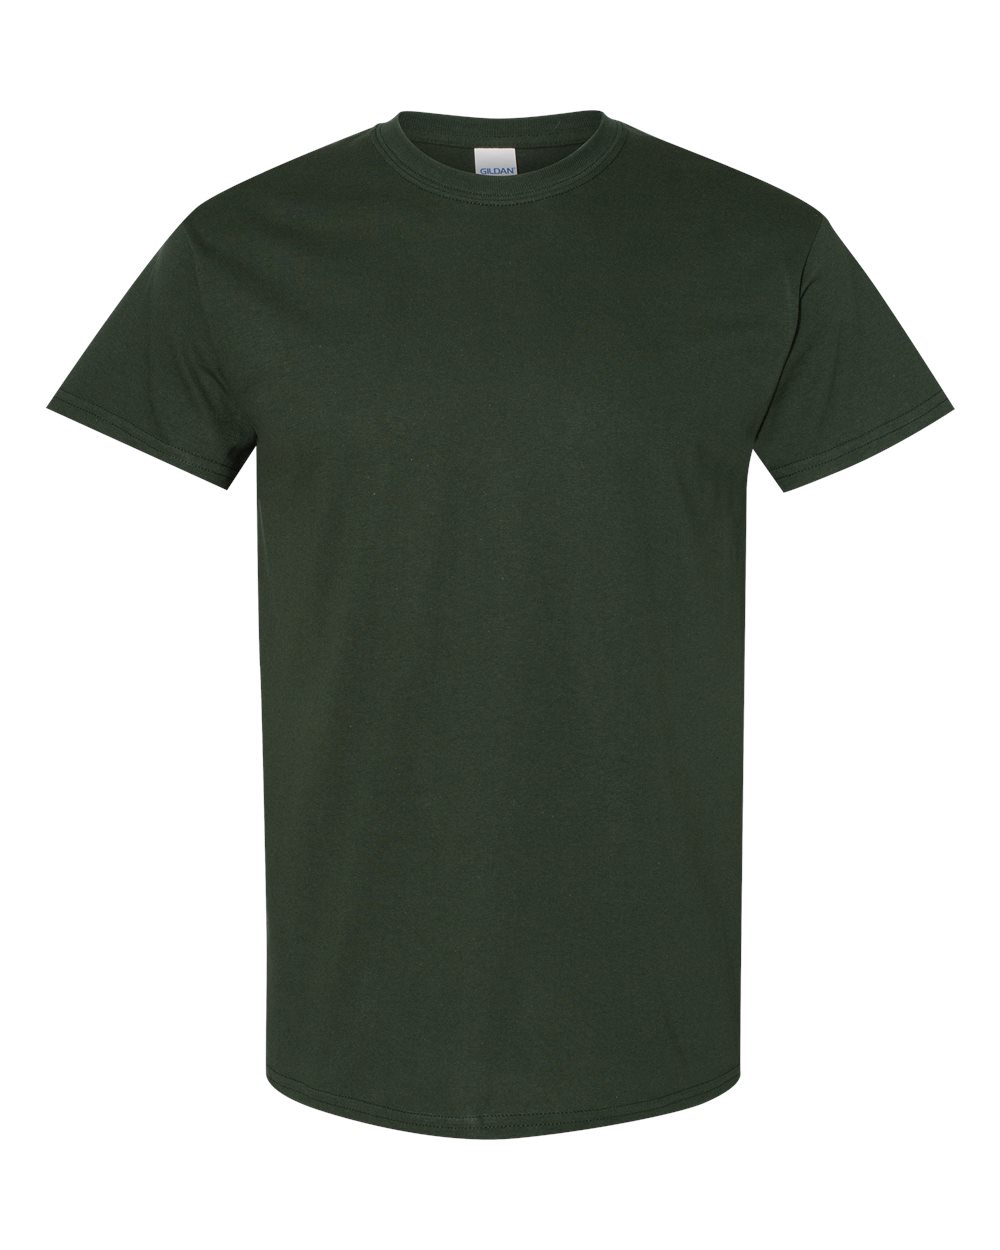 Pretreated Gildan 5000 Heavy Cotton T-Shirt - Forest Green